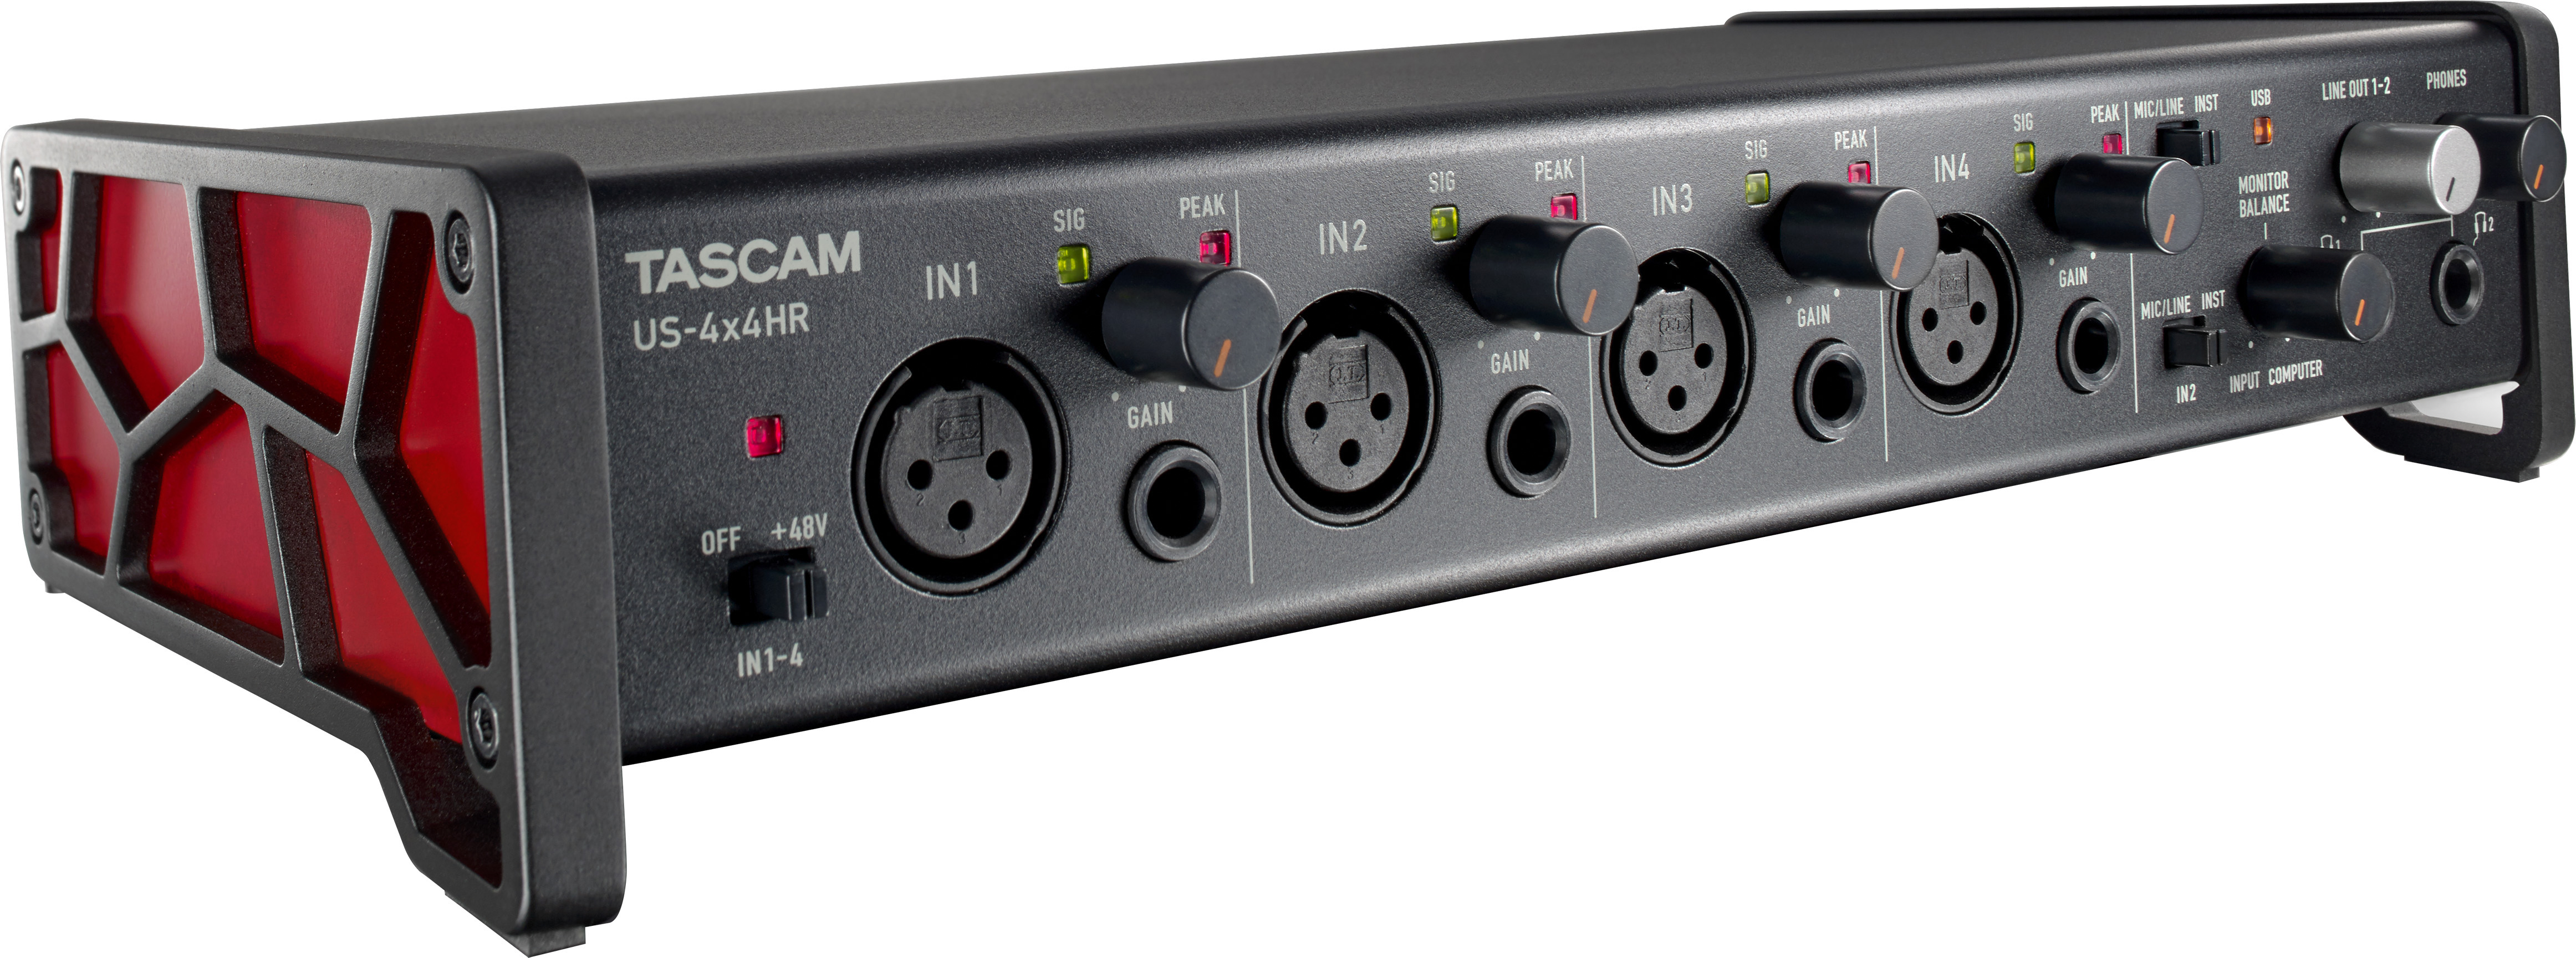 Tascam Us-4x4hr - Interface de audio USB - Variation 1